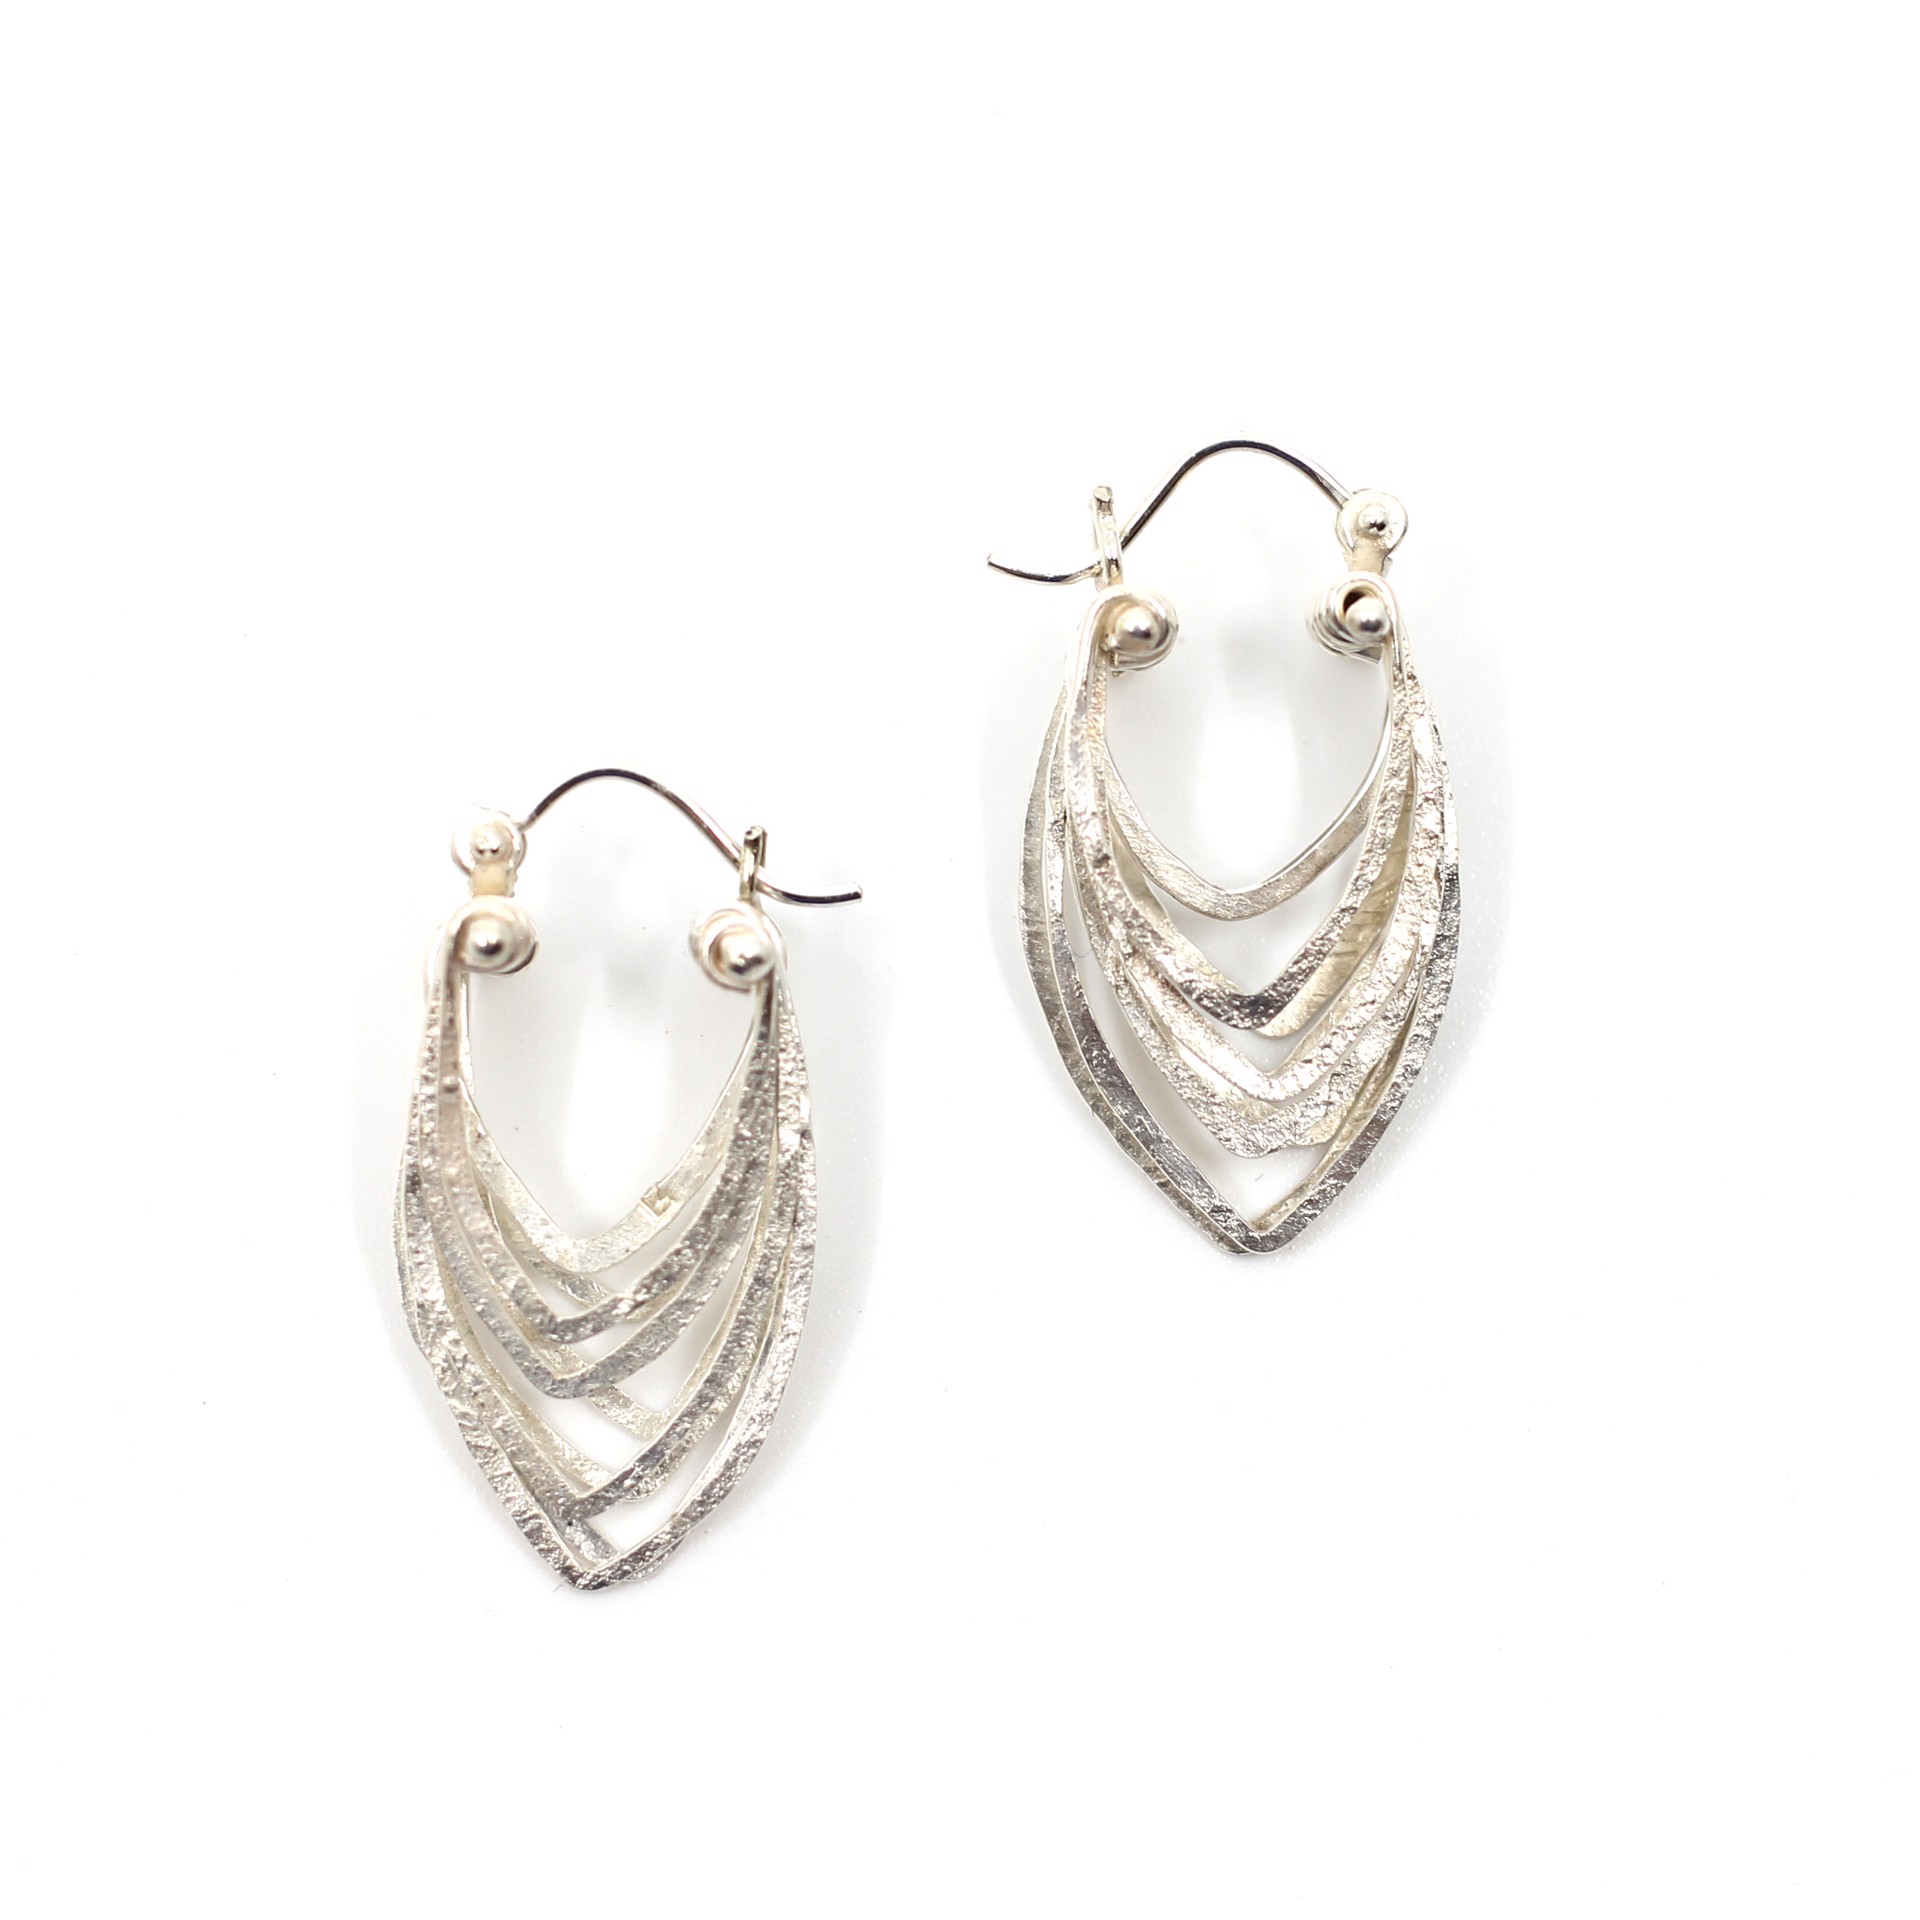 Small Cicada Earrings by Leia Zumbro